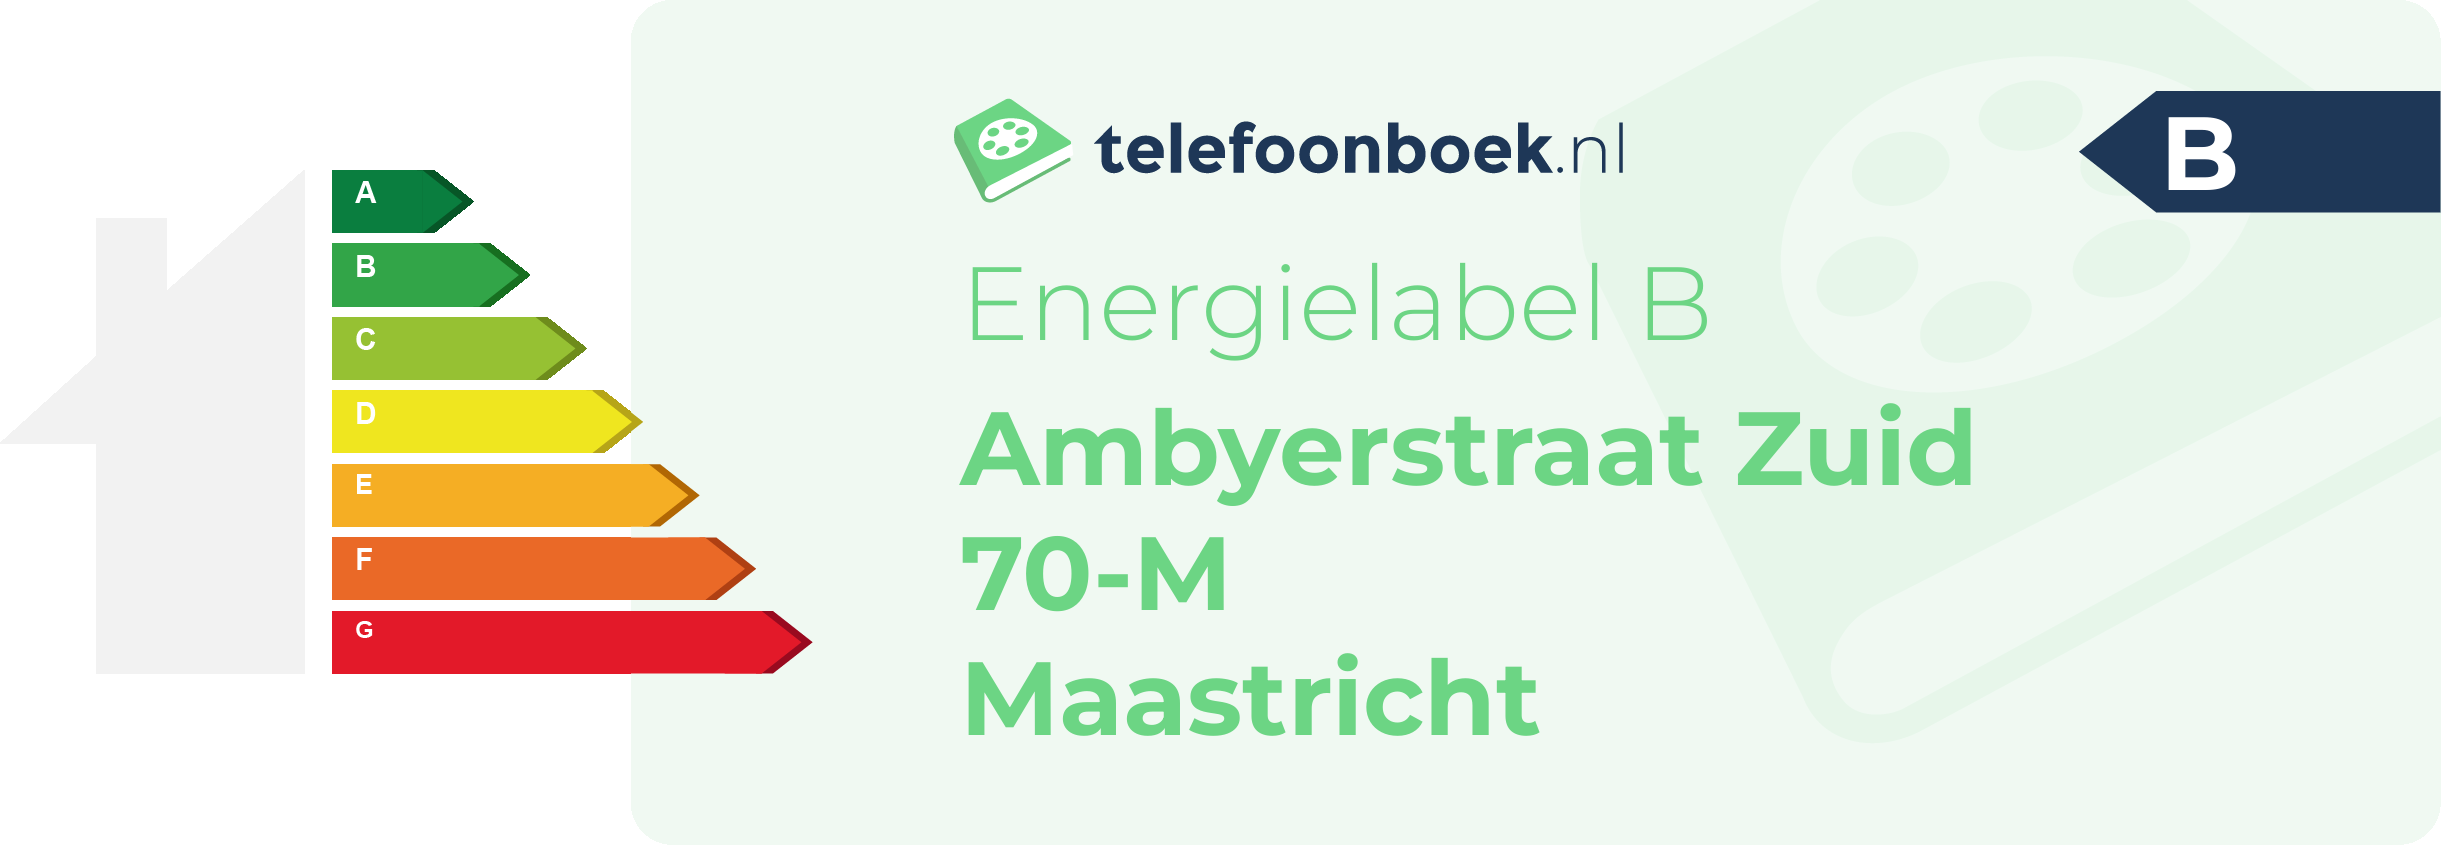 Energielabel Ambyerstraat Zuid 70-M Maastricht